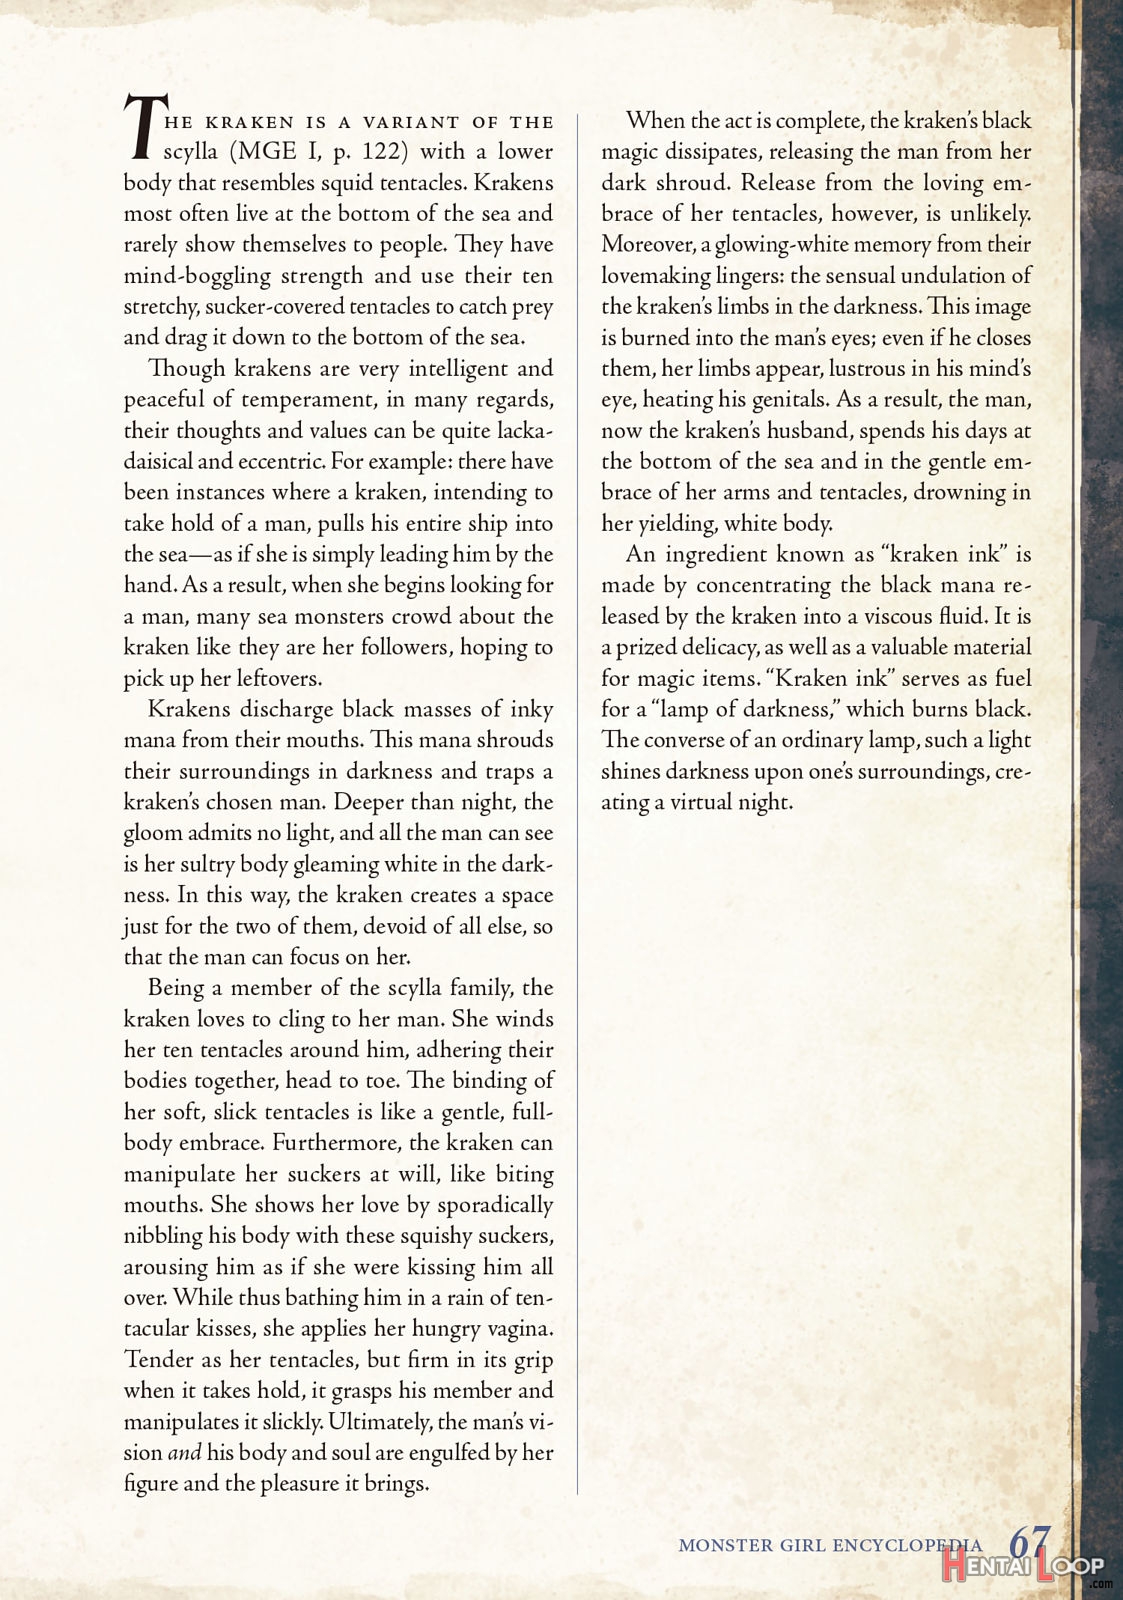 Monster Girl Encyclopedia Vol. 2 page 68